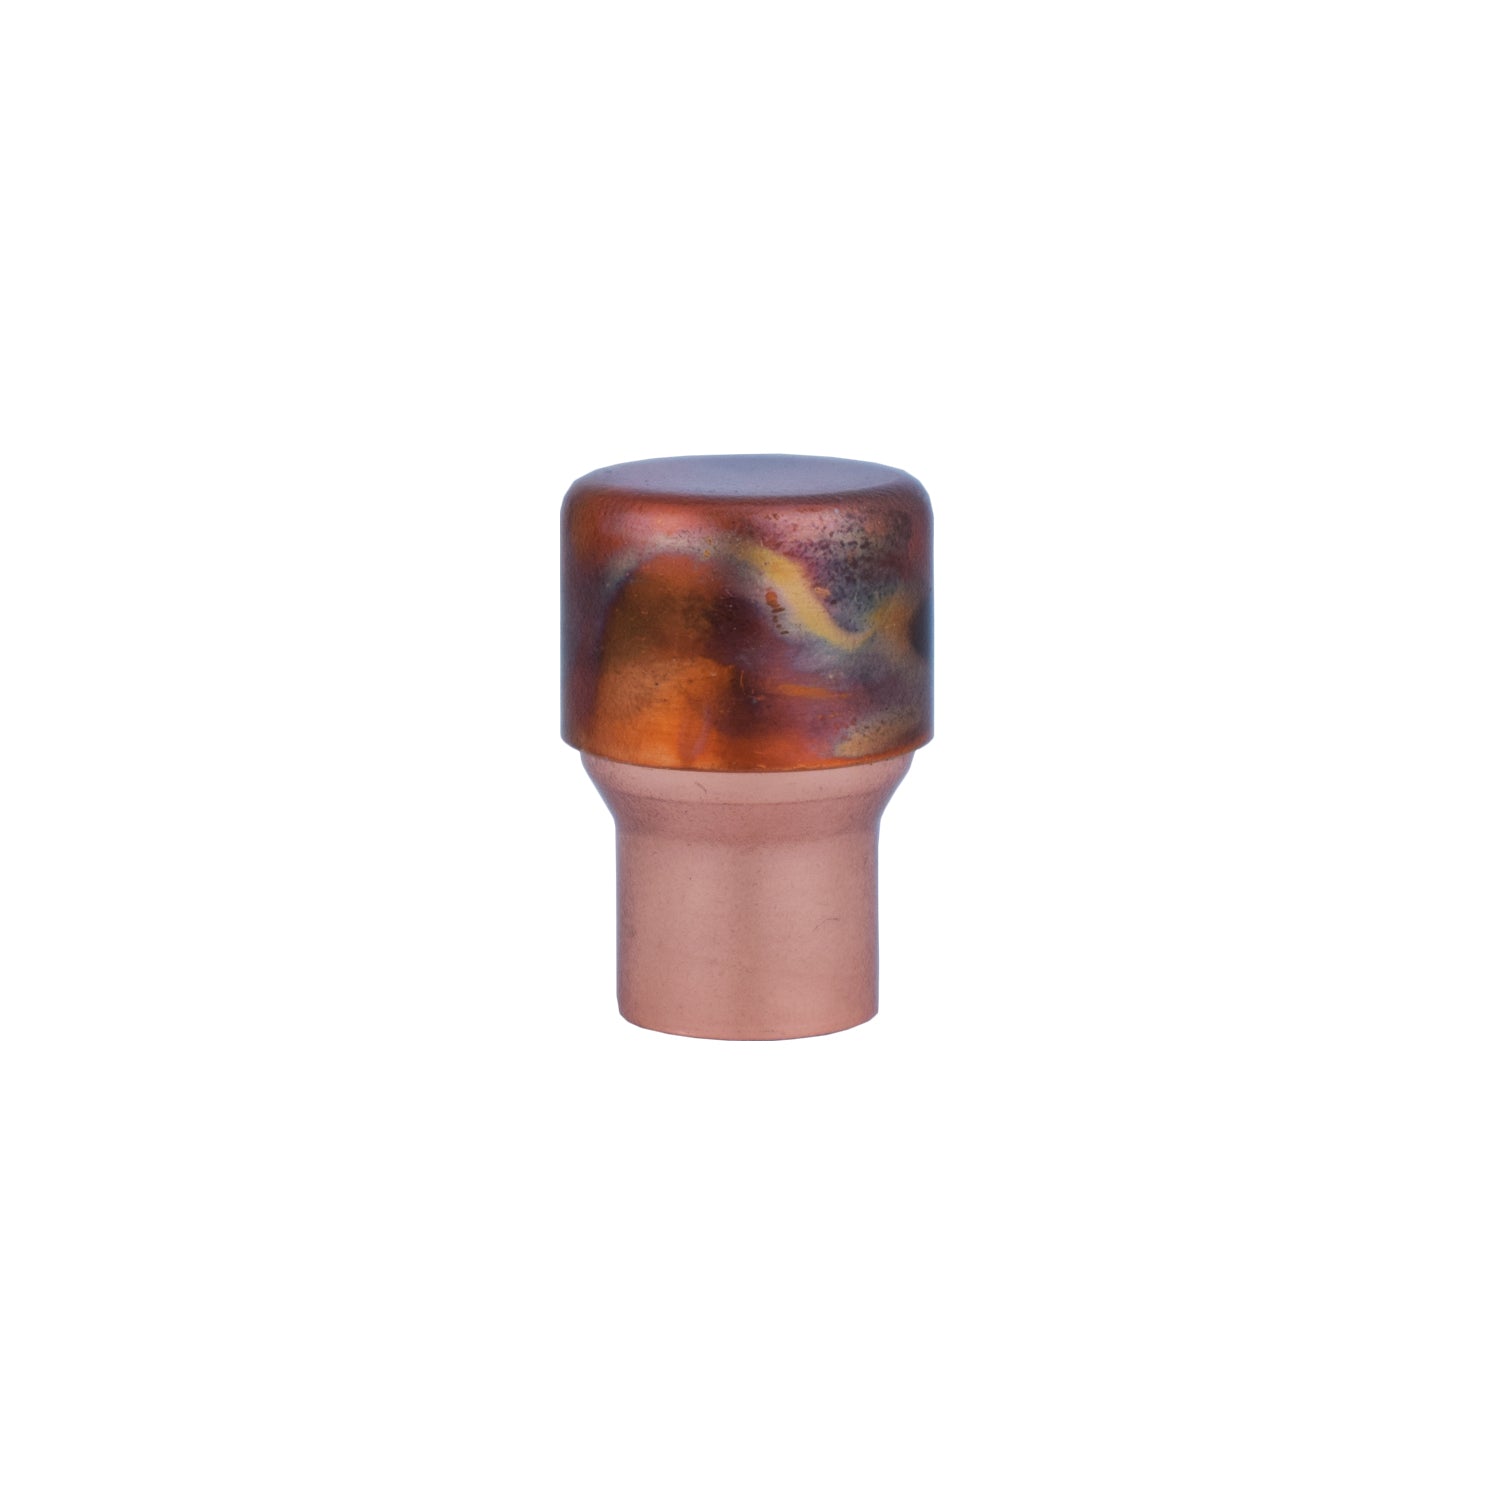 Copper Knob Raised - Marbled and High Polish Mix - Proper Copper Design